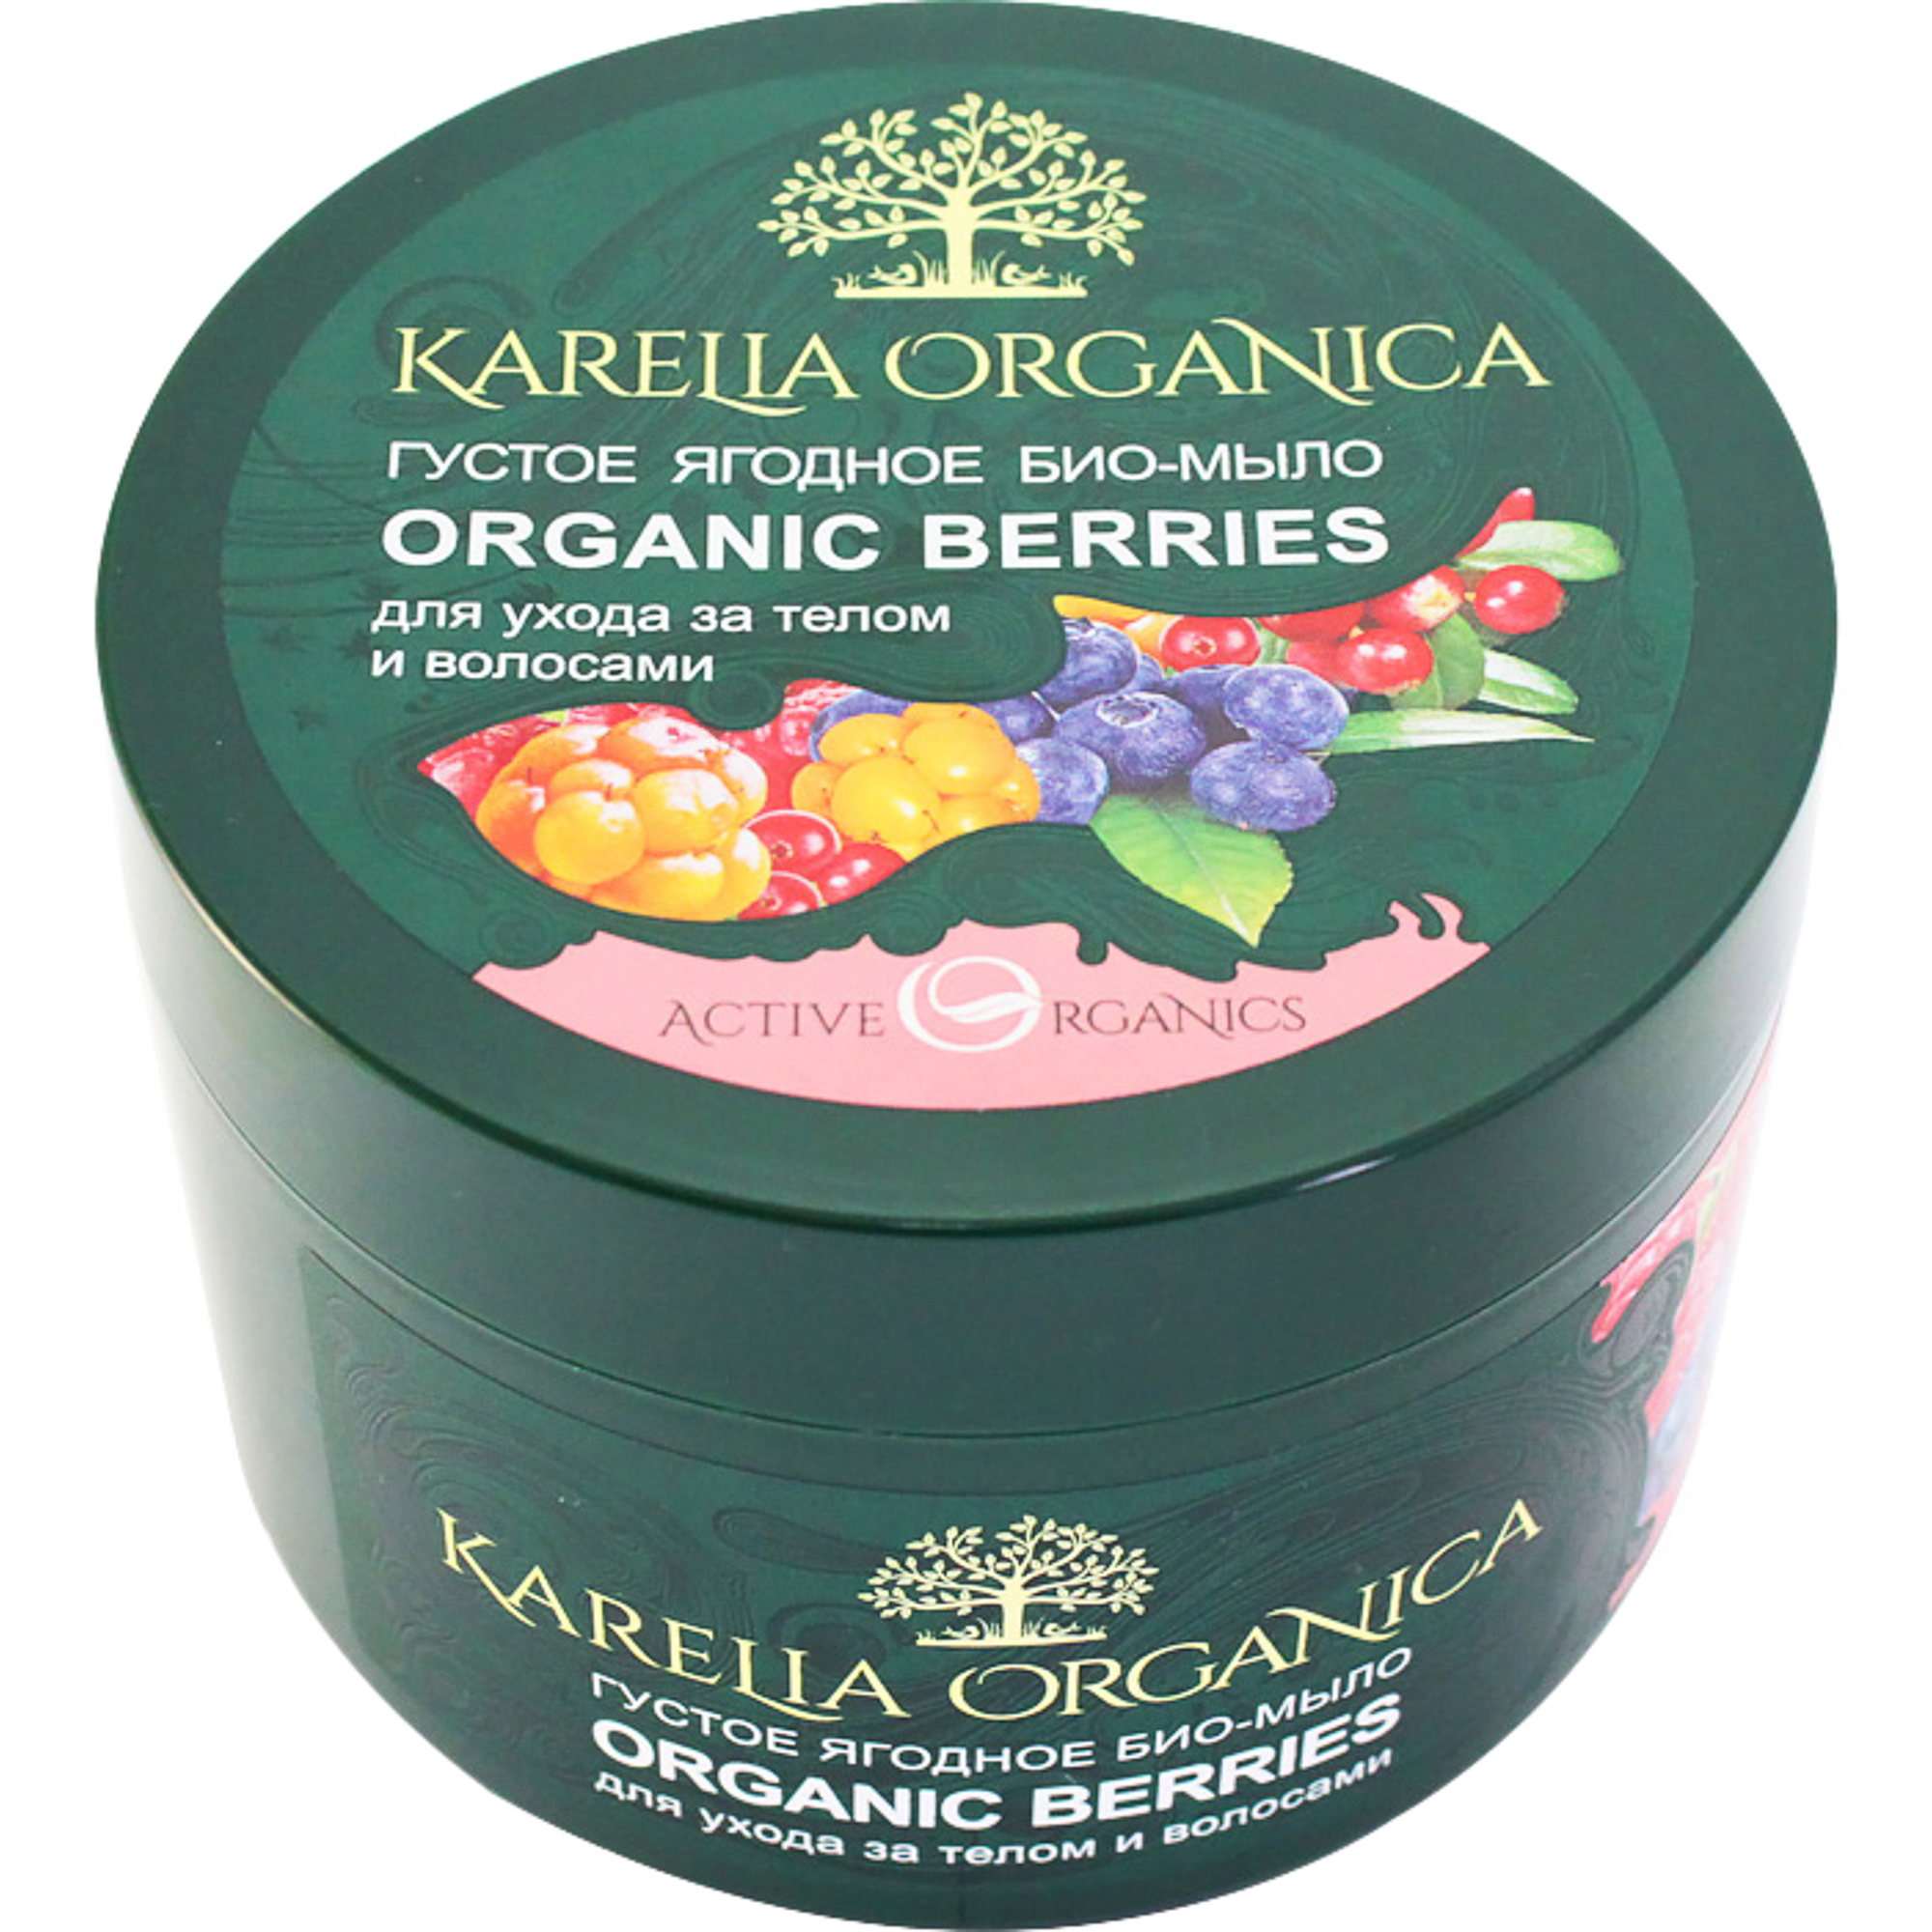 Мыло Фратти НВ Karelia Organica Organic Berries густое 500 г, размер 8x11x11 см 420702 - фото 2